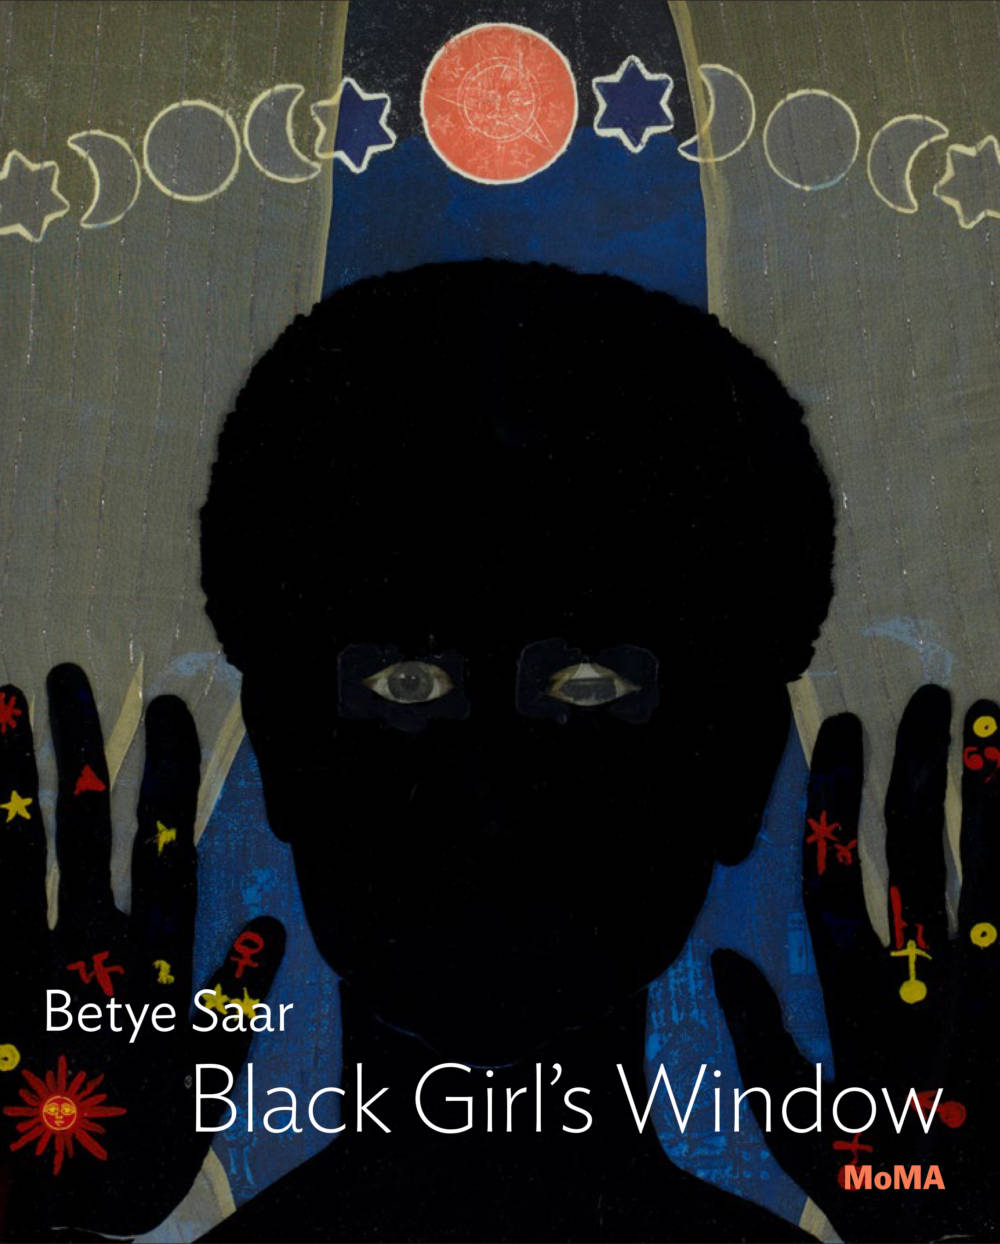 Betye Saar: Black Girl’s Window